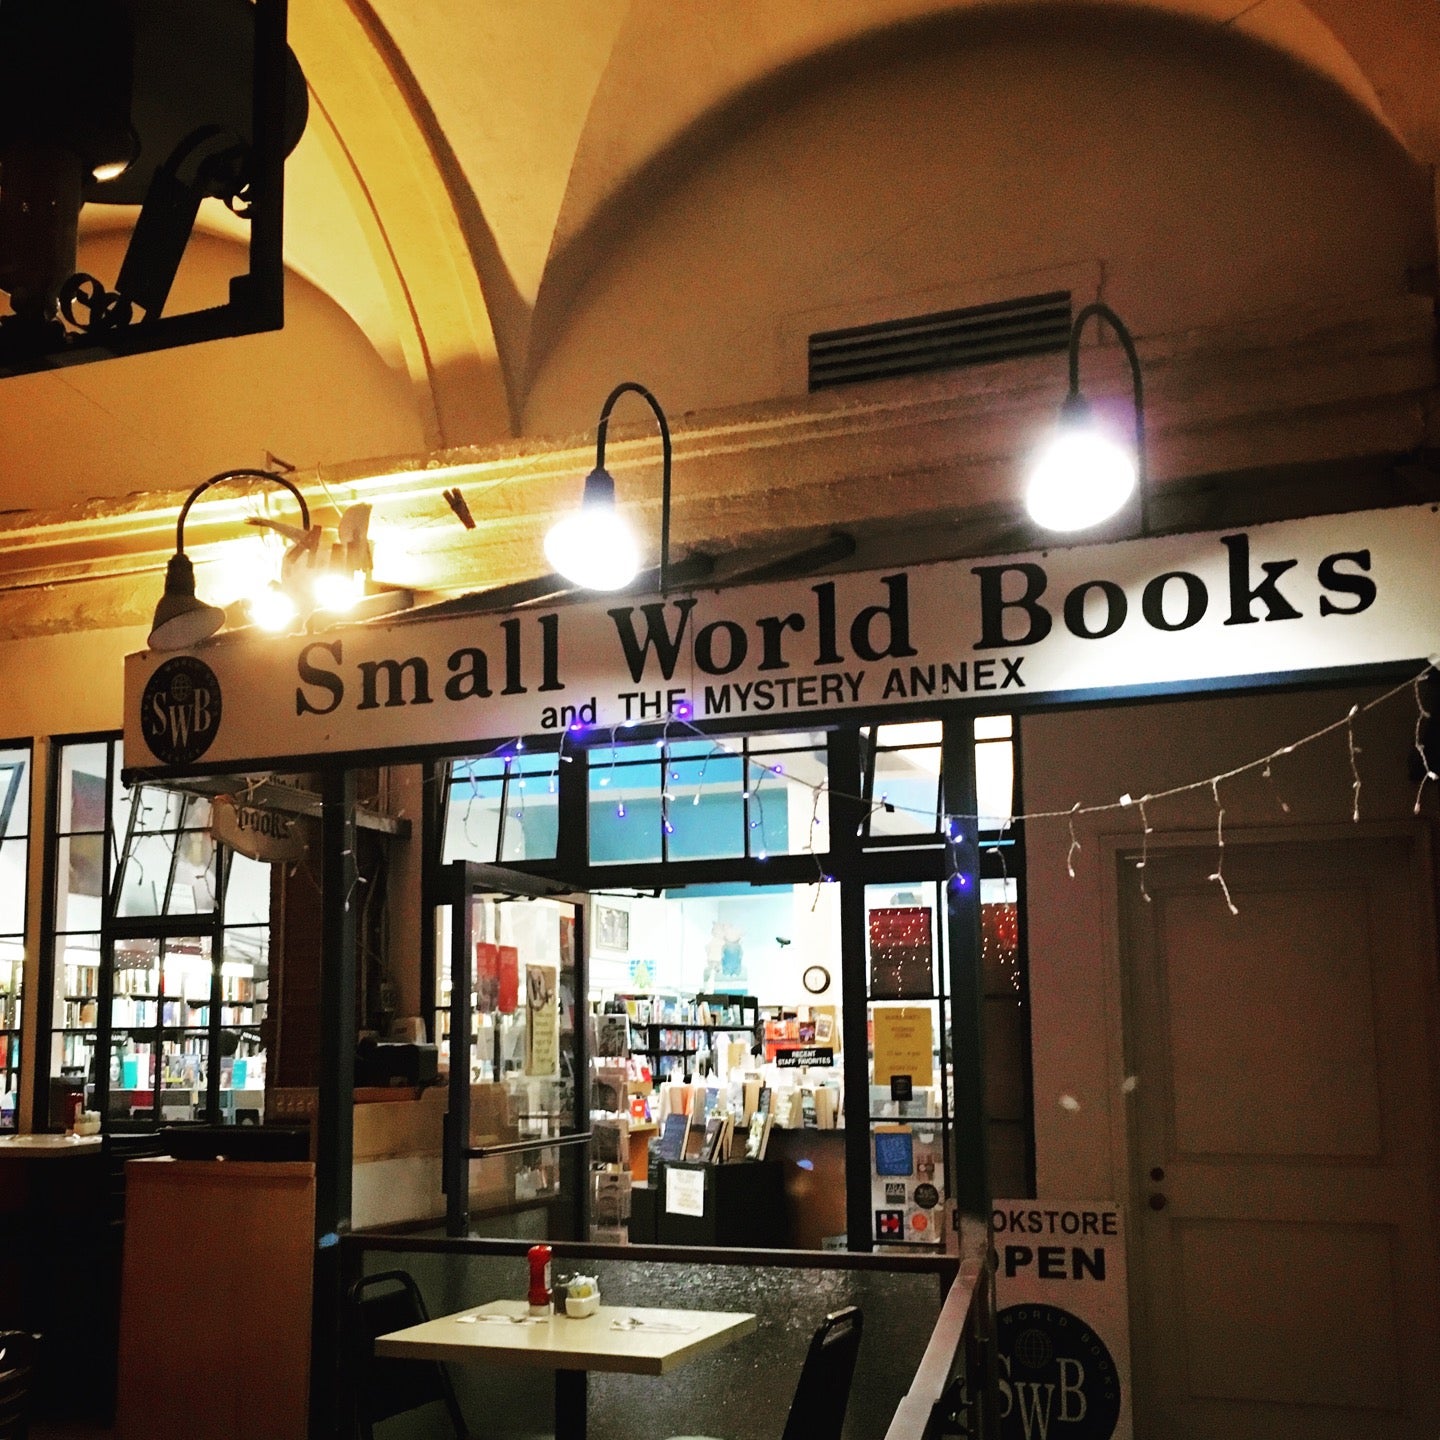 Small World Books